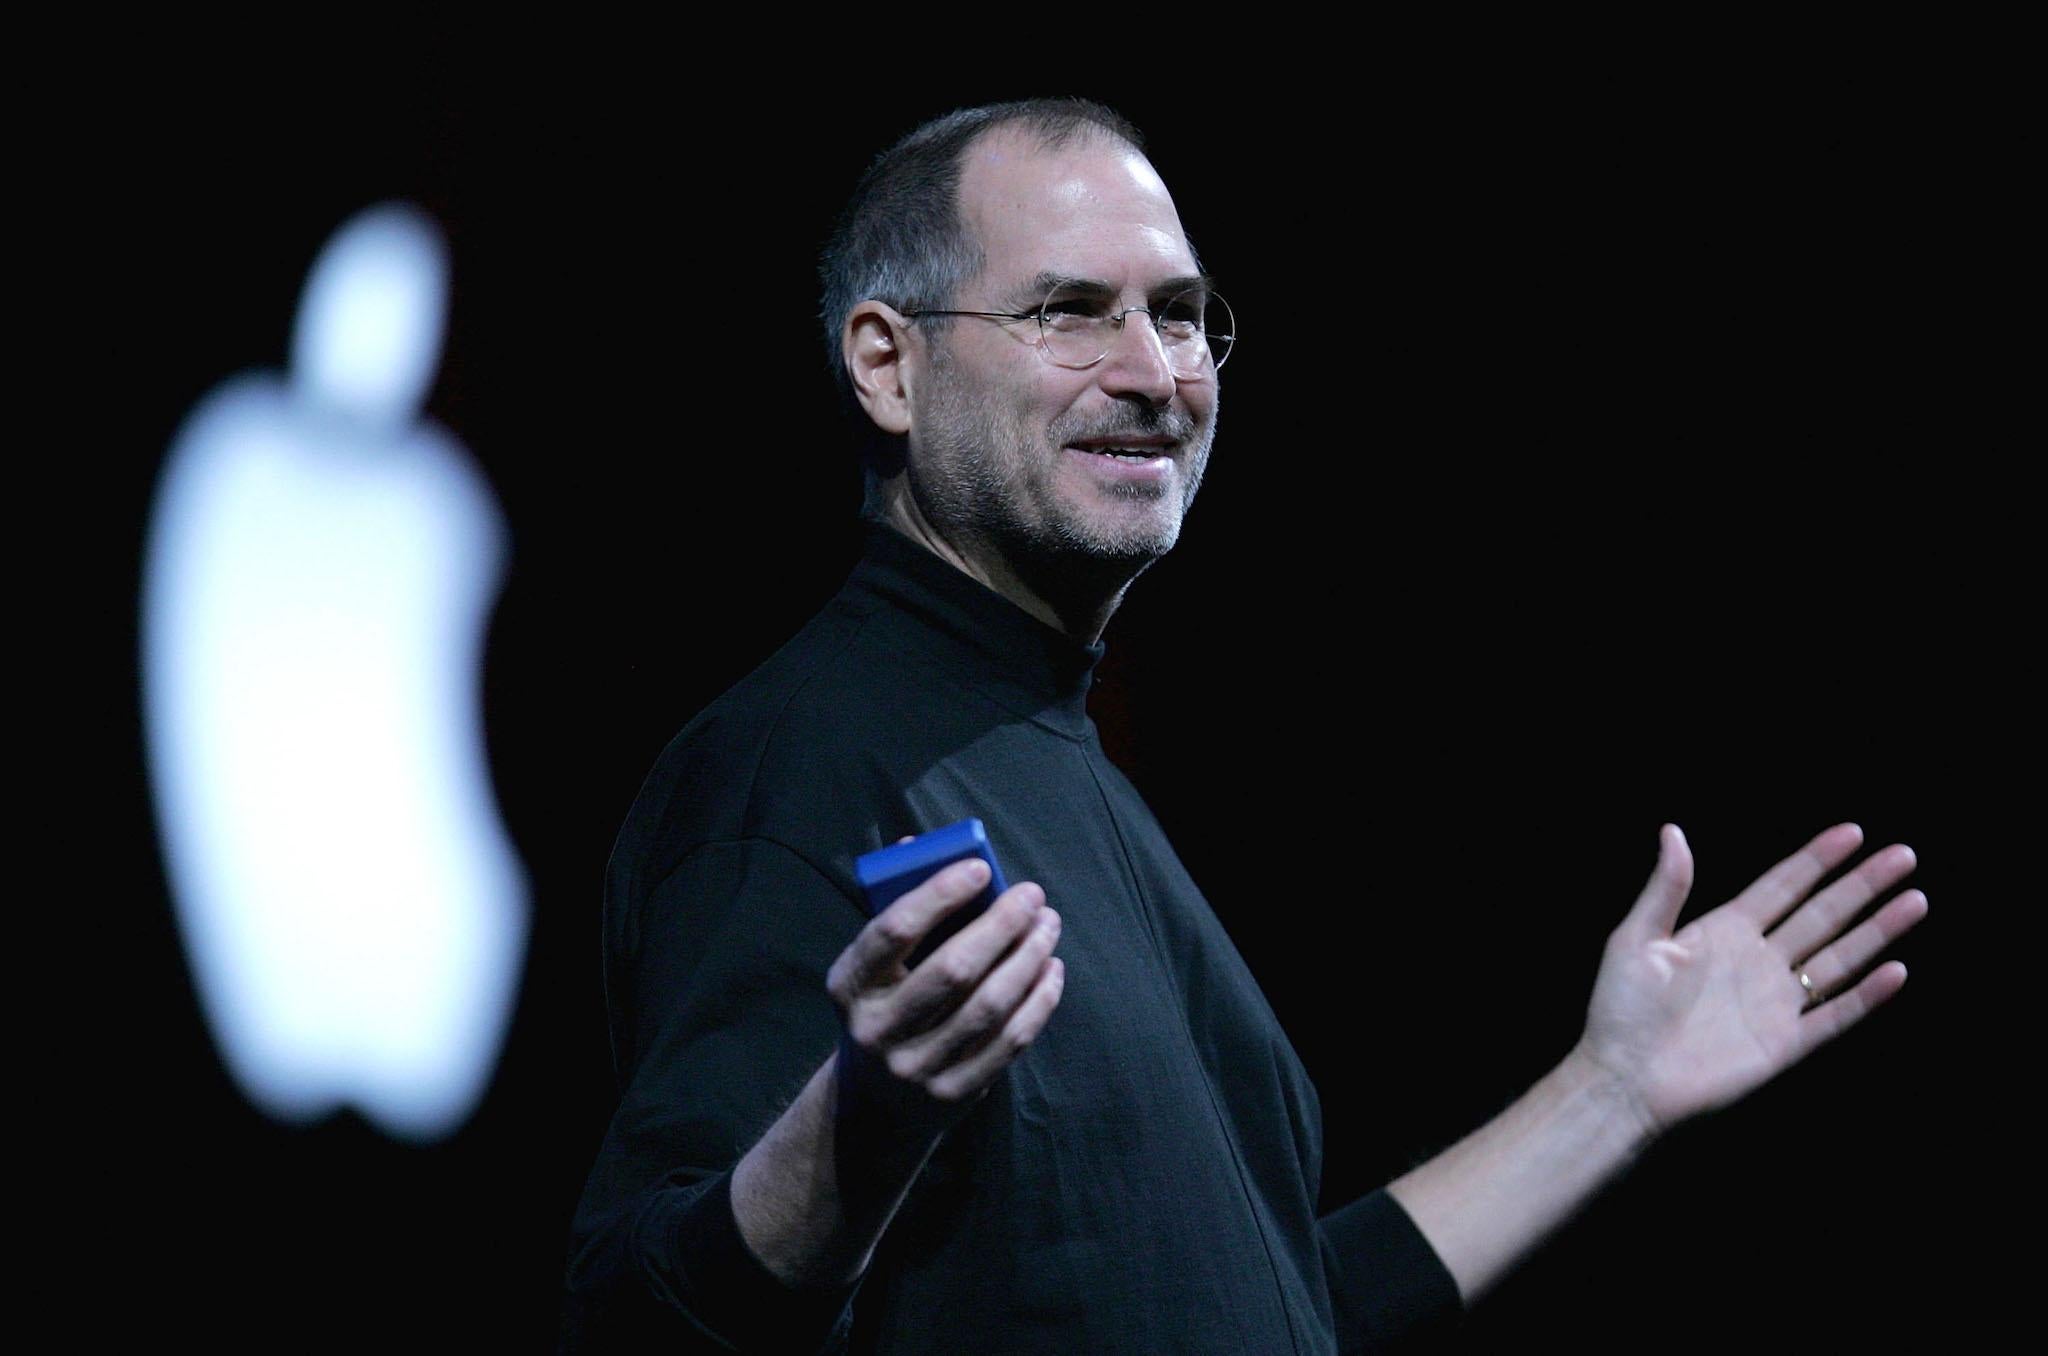 Apple CEO Steve Jobs delivers a keynote address at the 2005 Macworld Expo January 11, 2005 in San Francisco, California